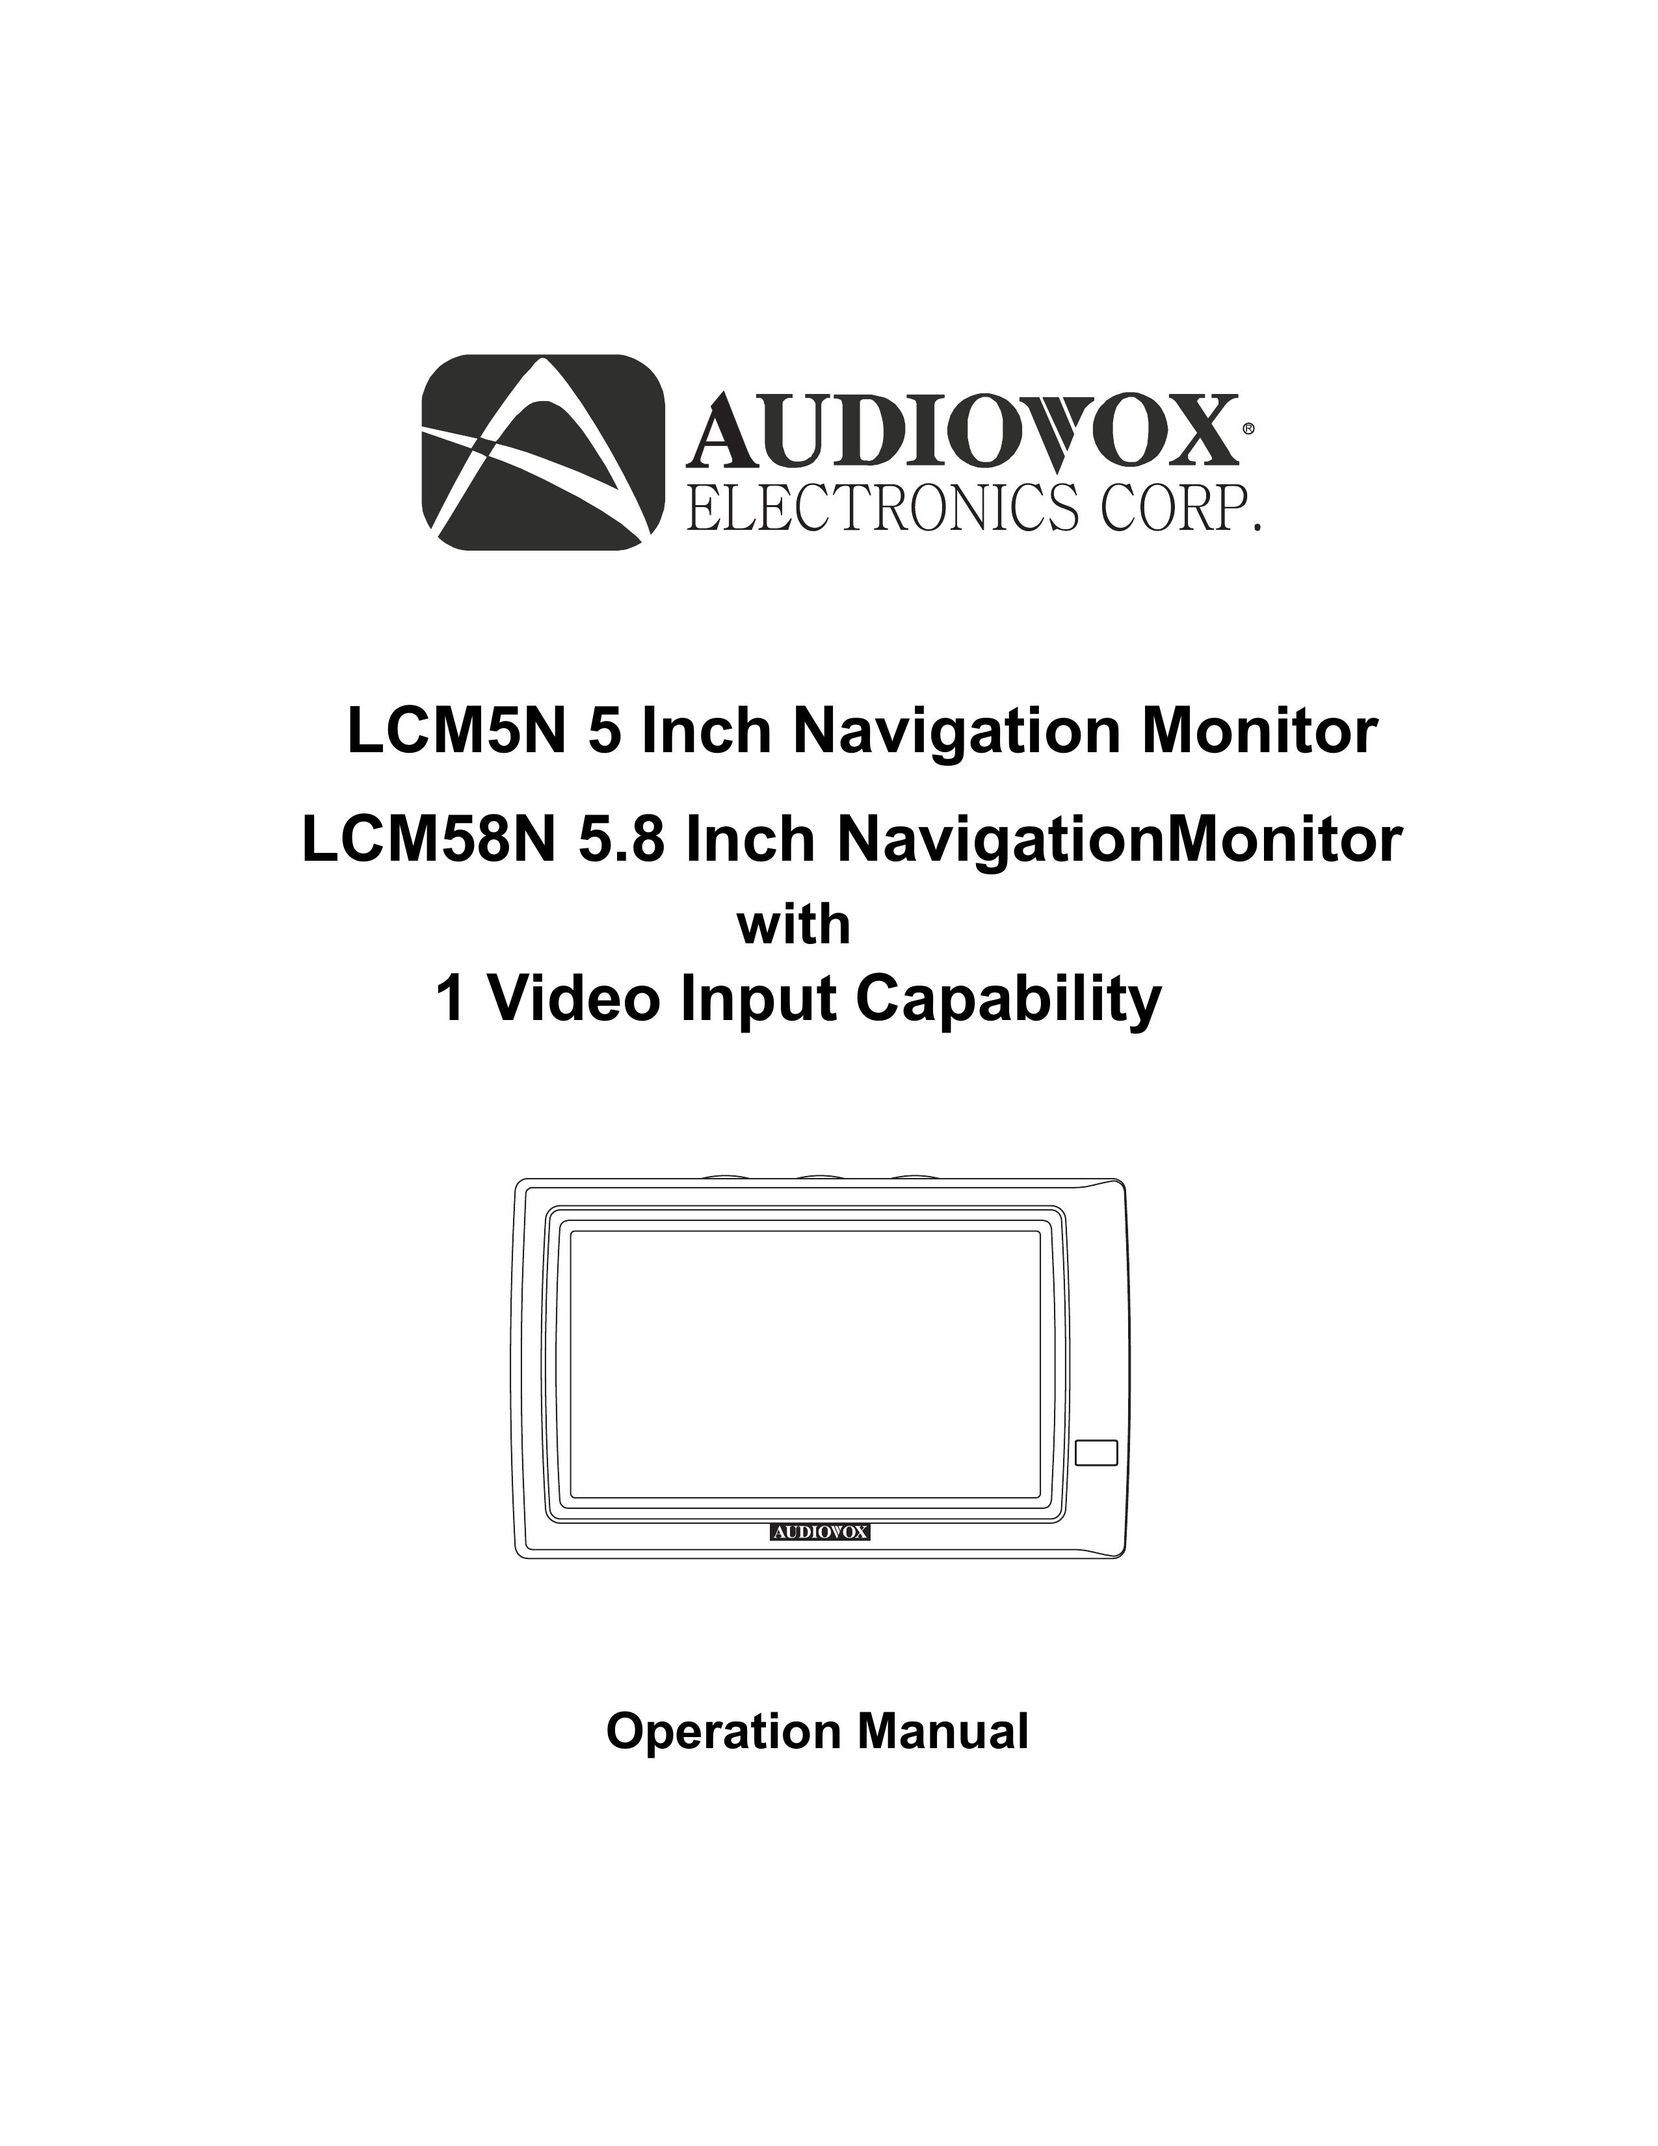 Audiovox LCM58N Computer Monitor User Manual